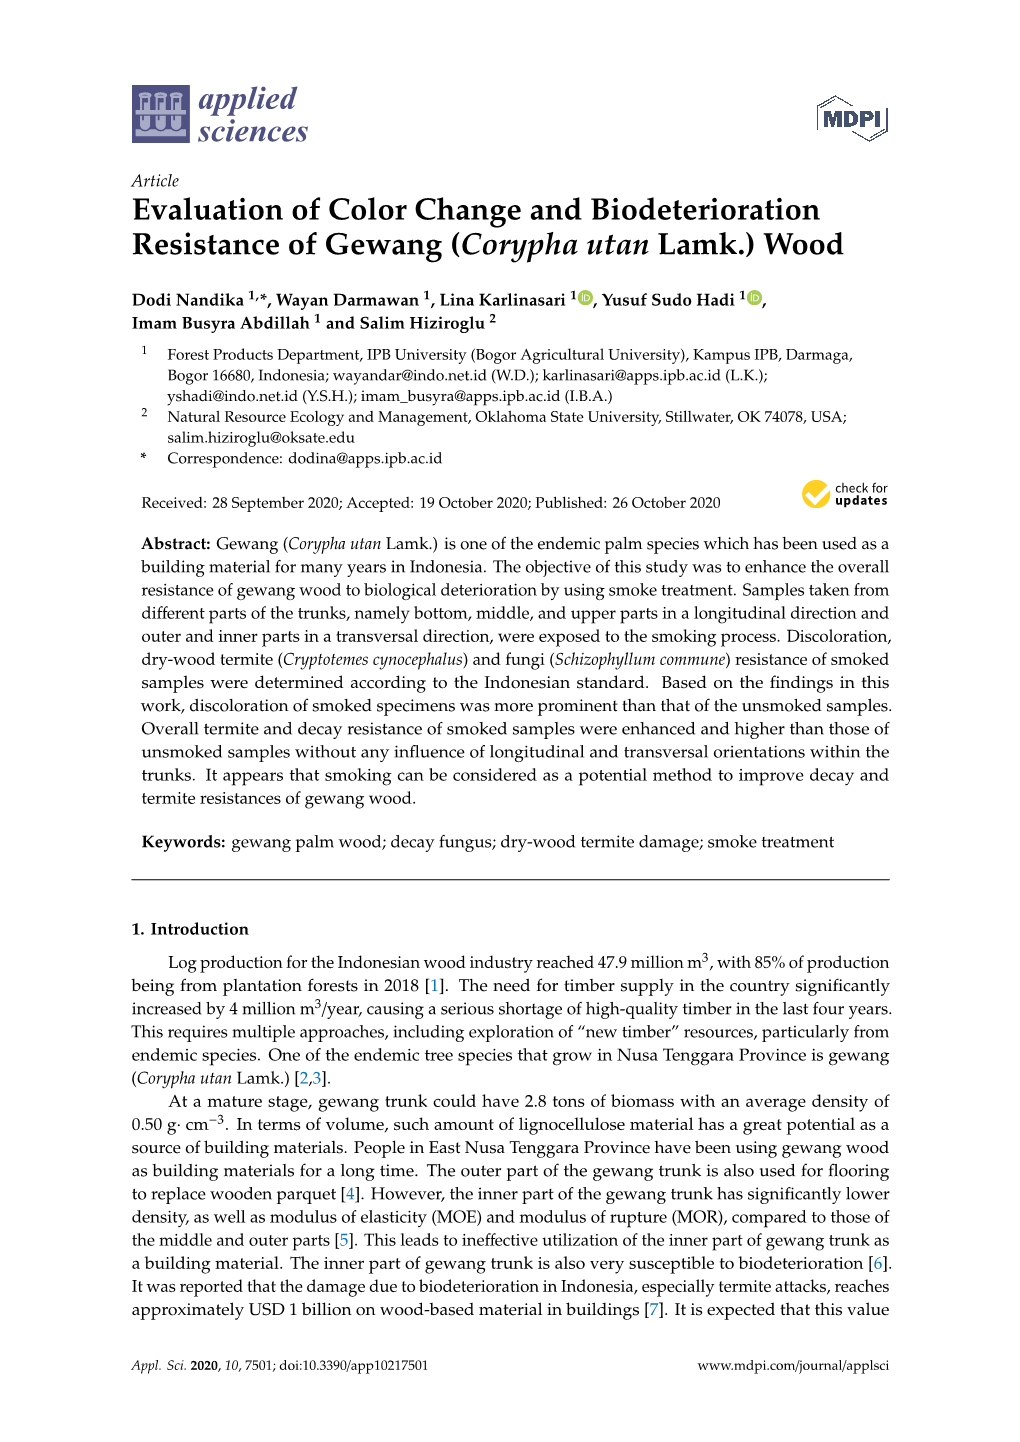 Evaluation of Color Change and Biodeterioration Resistance of Gewang (Corypha Utan Lamk.) Wood